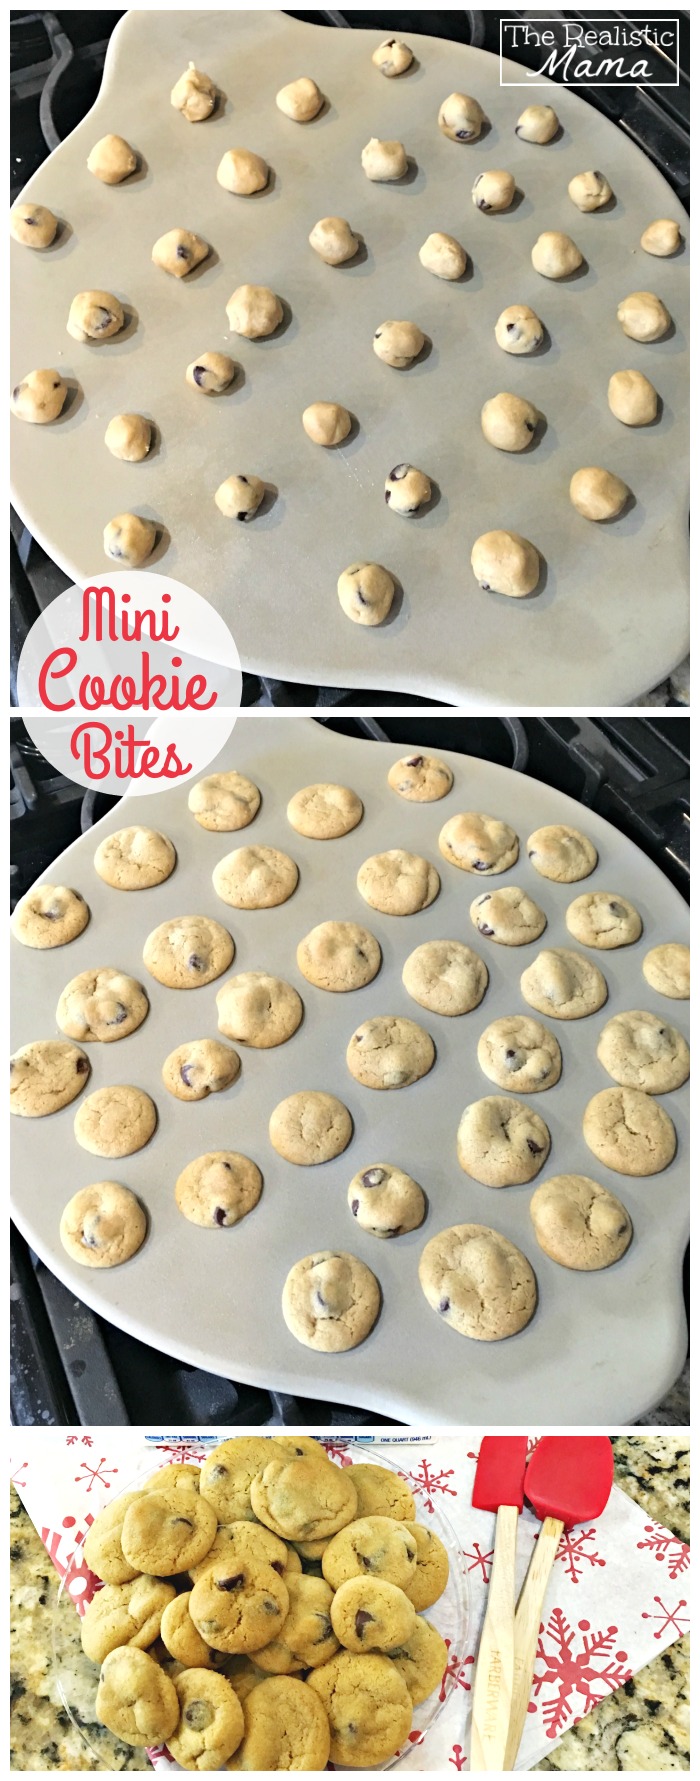 Mini Cookie Bites